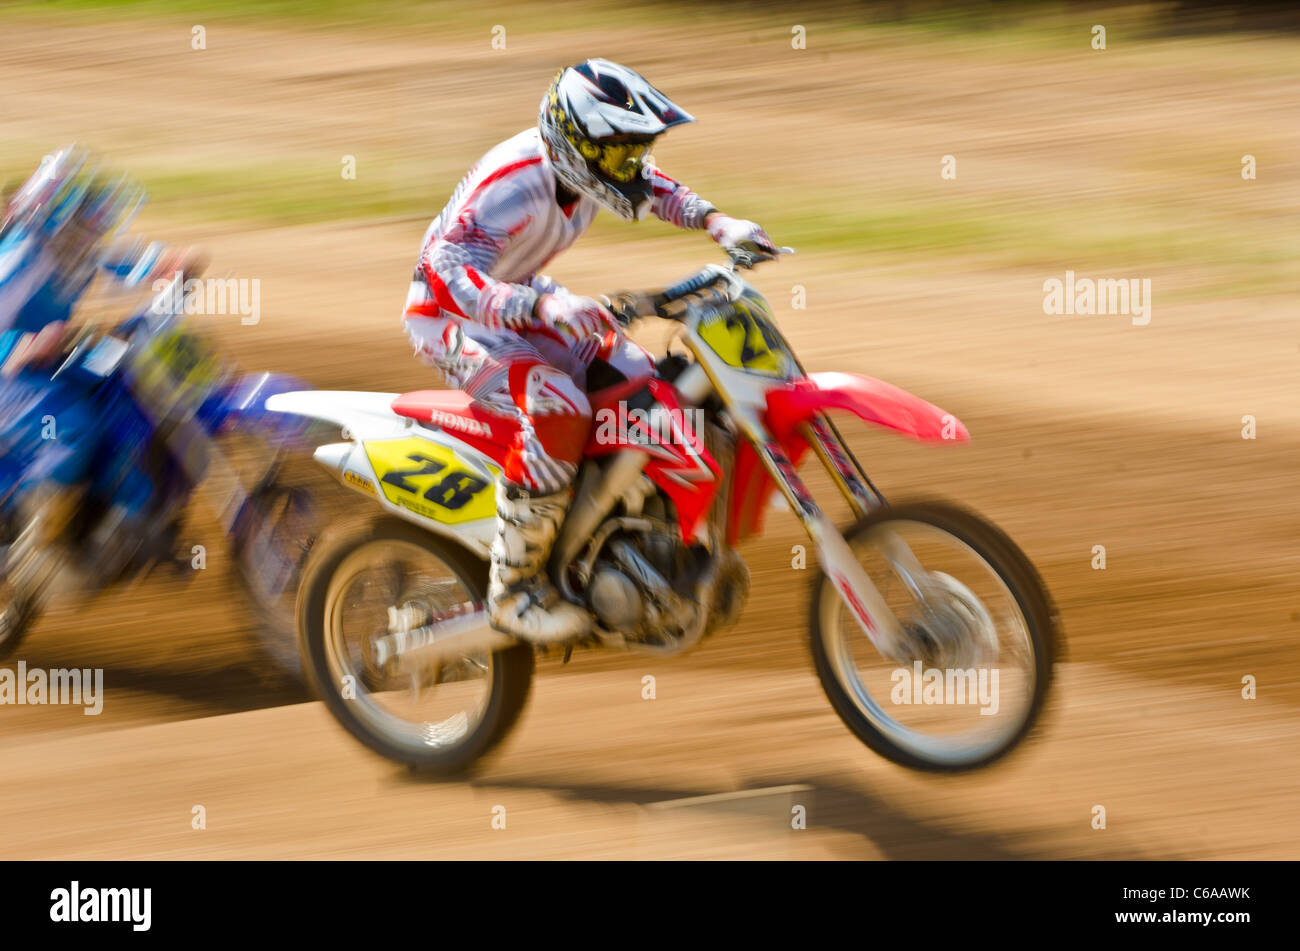 Motocross racing at Finningley, UK Stock Photo